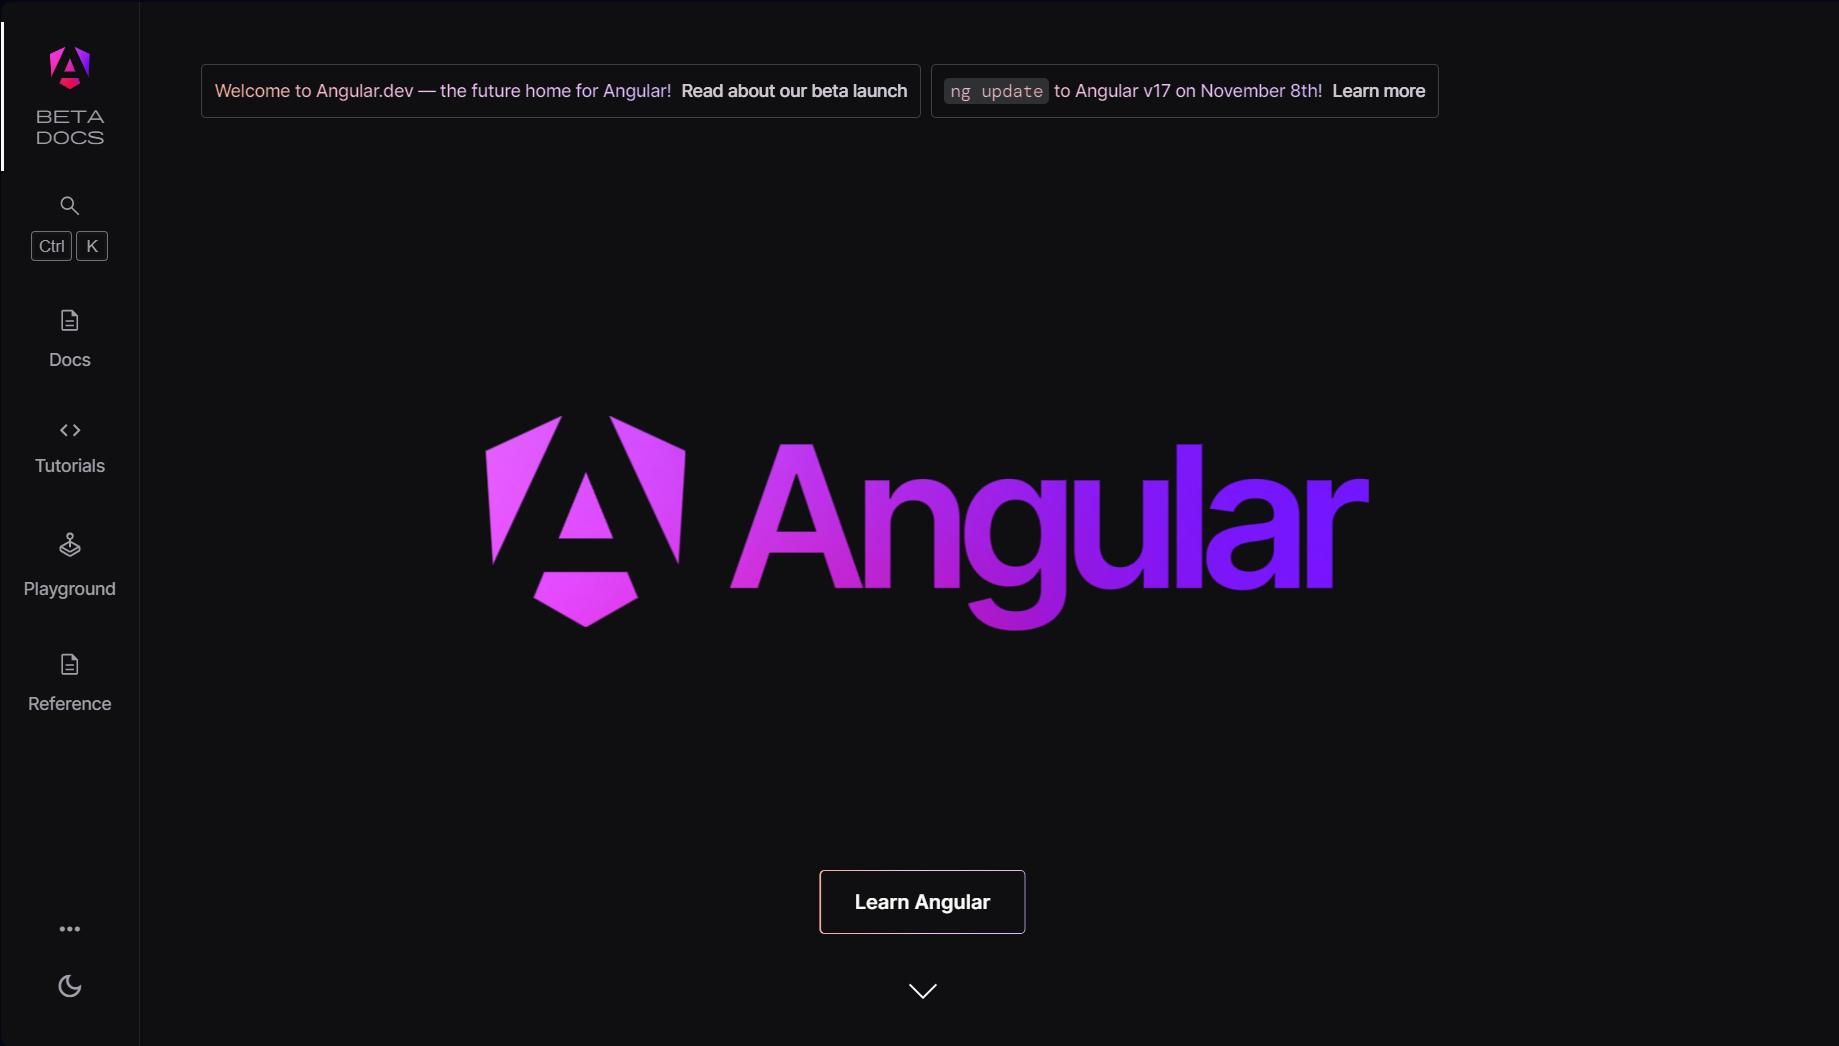 Site angular.dev